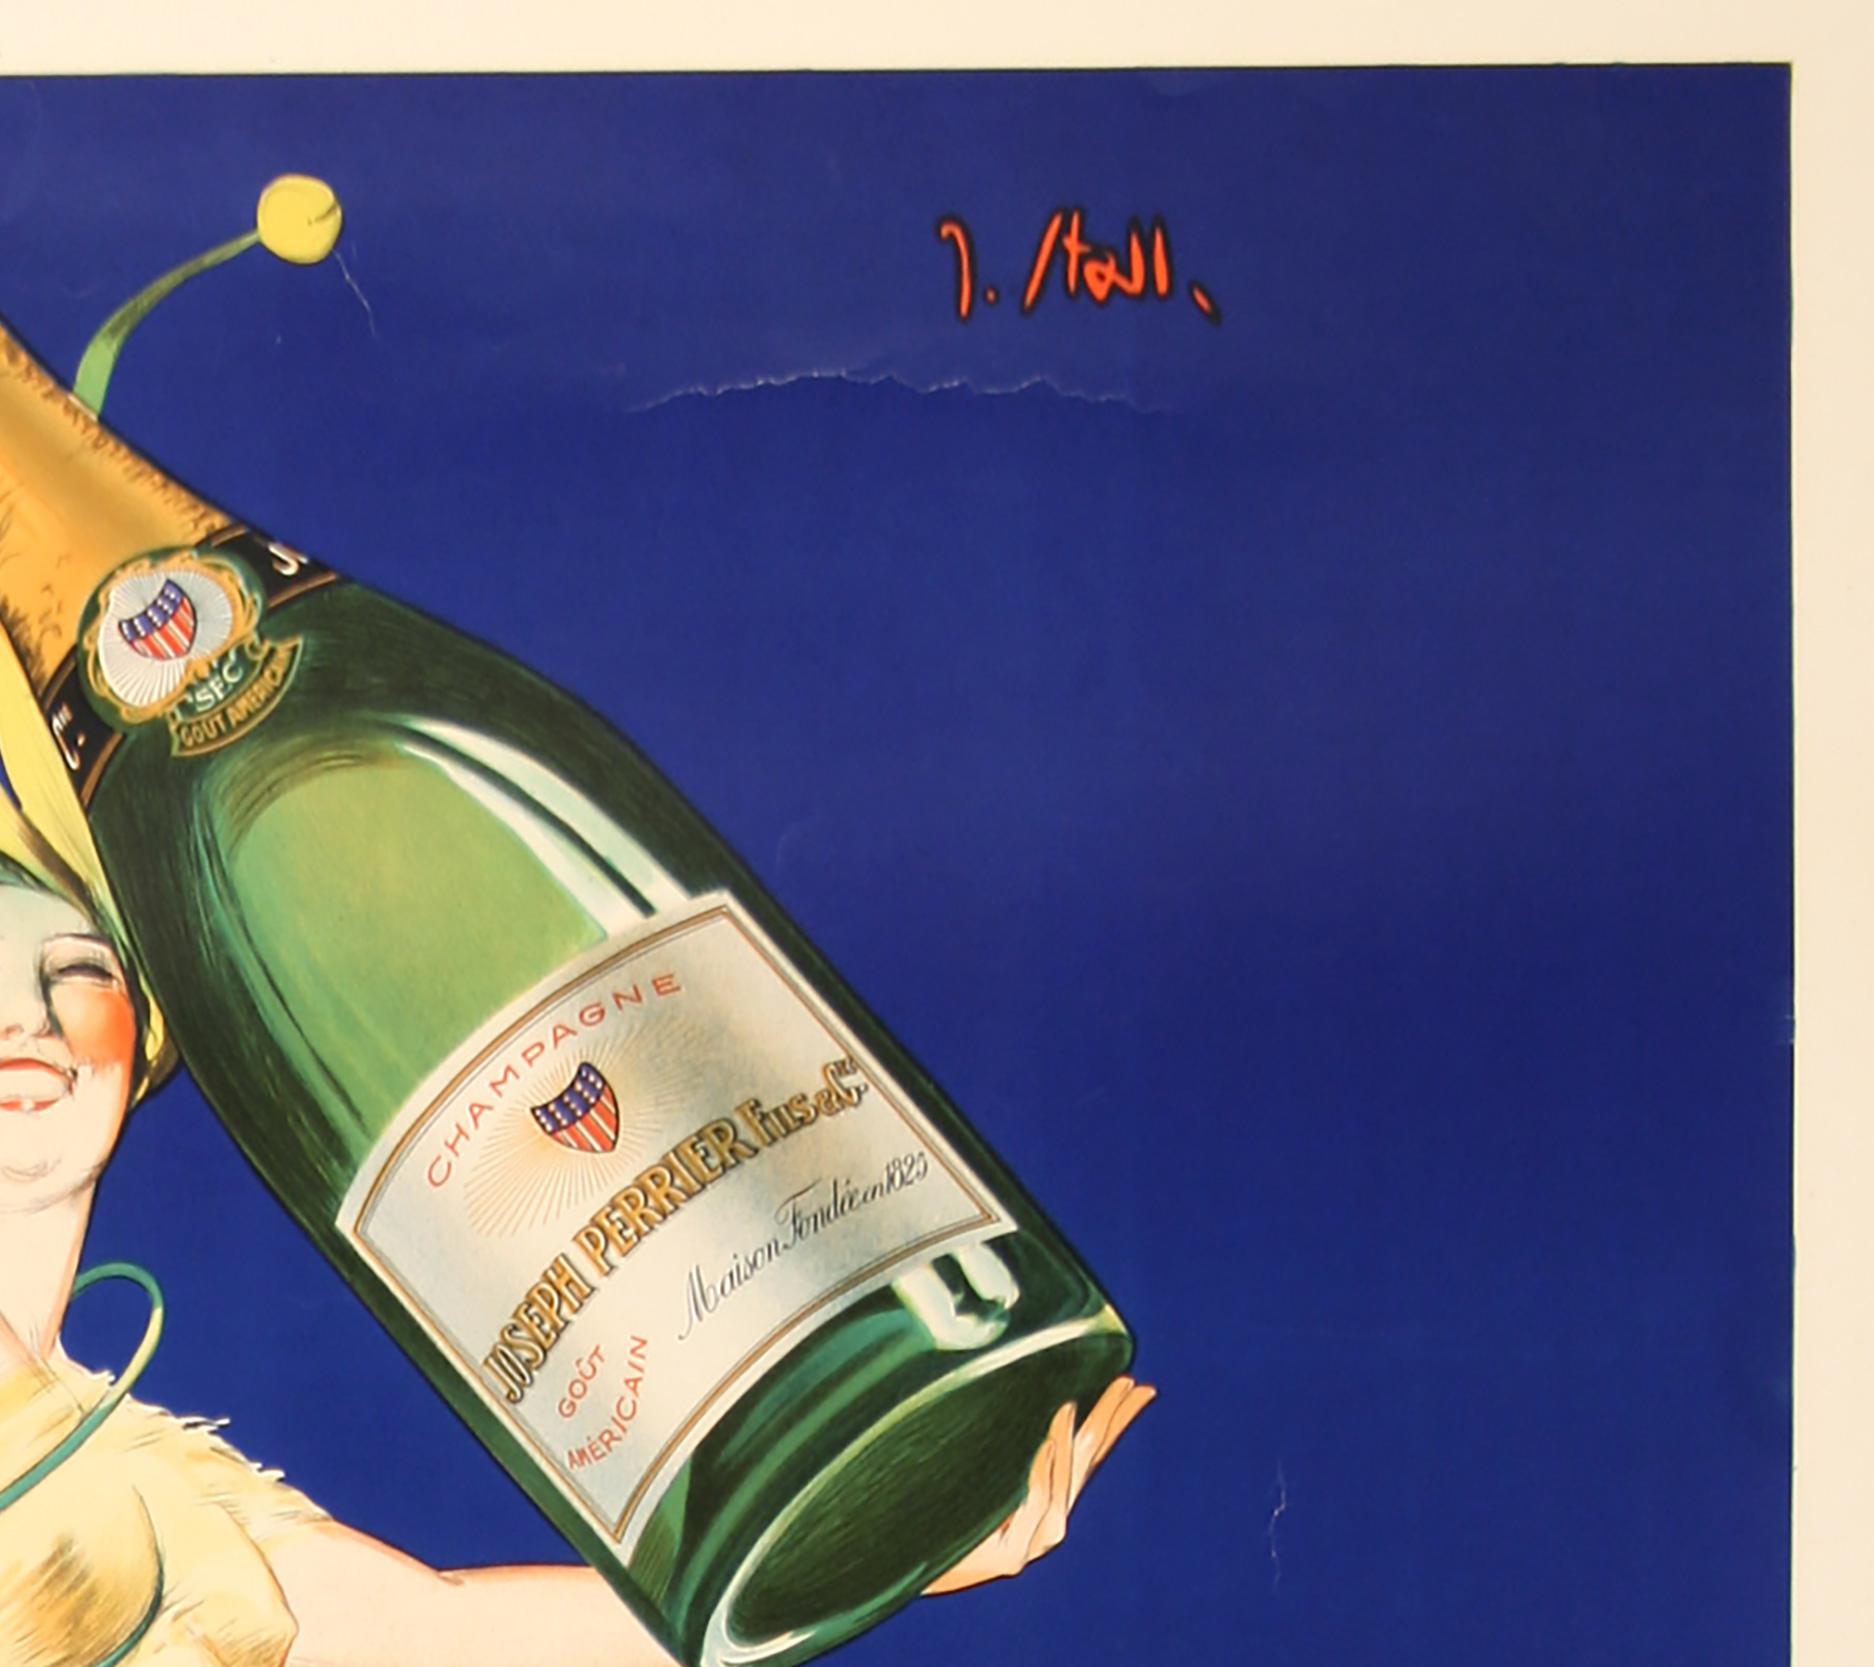 joseph perrier champagne poster